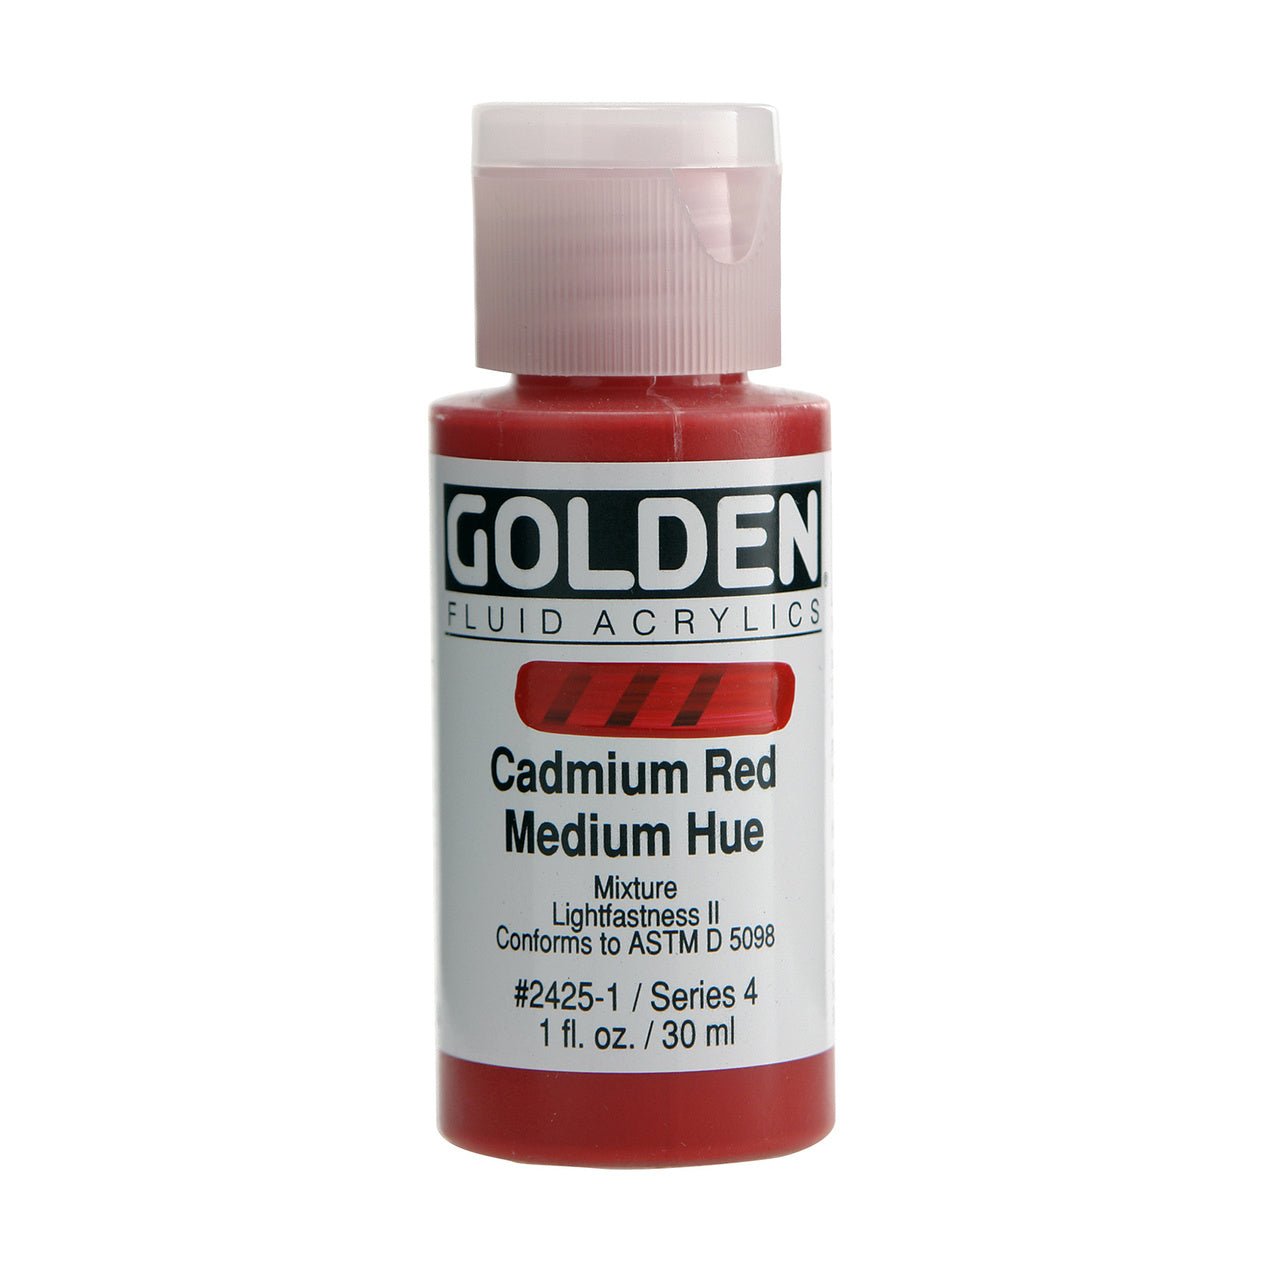 Golden Fluid Acrylic Cadmium Red Medium Hue 1 oz - merriartist.com